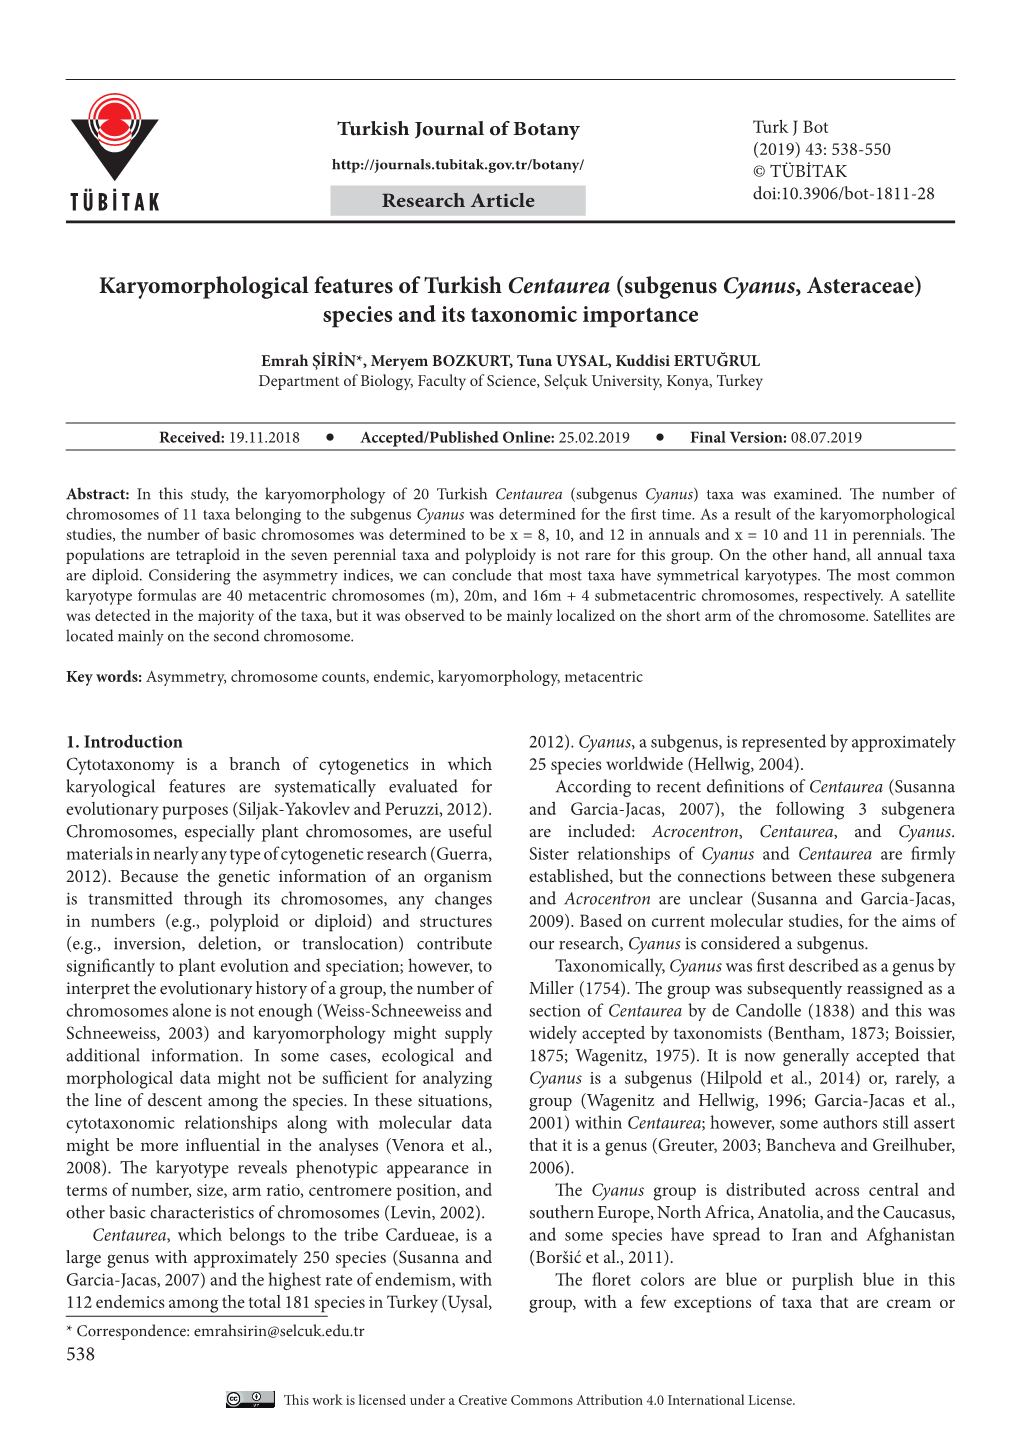 Karyomorphological Features of Turkish Centaurea (Subgenus Cyanus, Asteraceae) Species and Its Taxonomic Importance